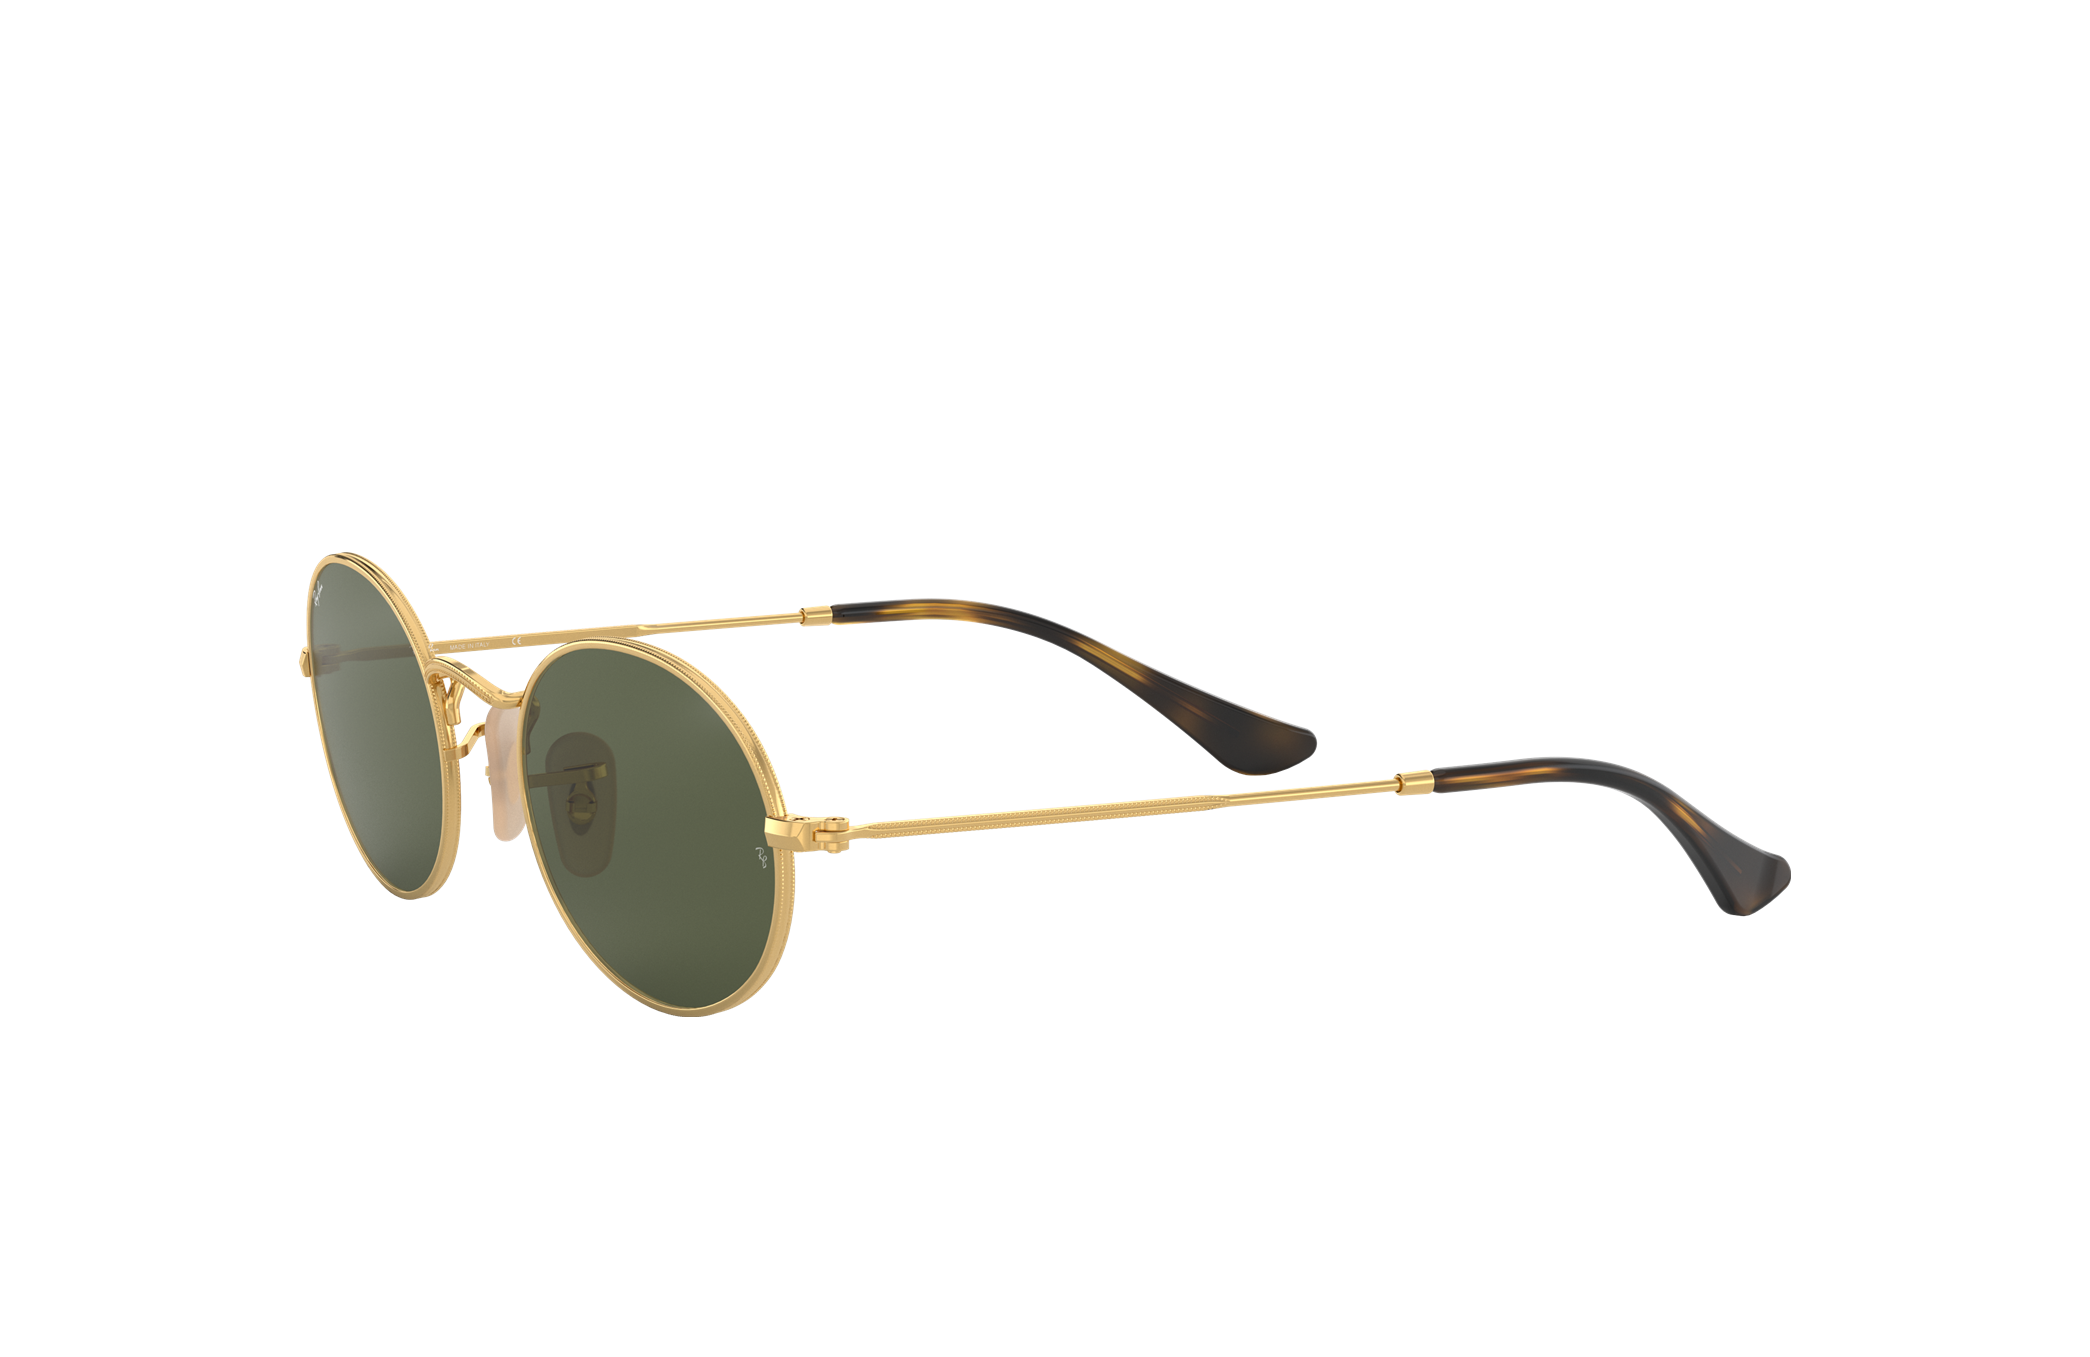 Ray Ban Ovale zonnebril volledige print casual uitstraling Accessoires Zonnebrillen Ovale zonnebrillen 